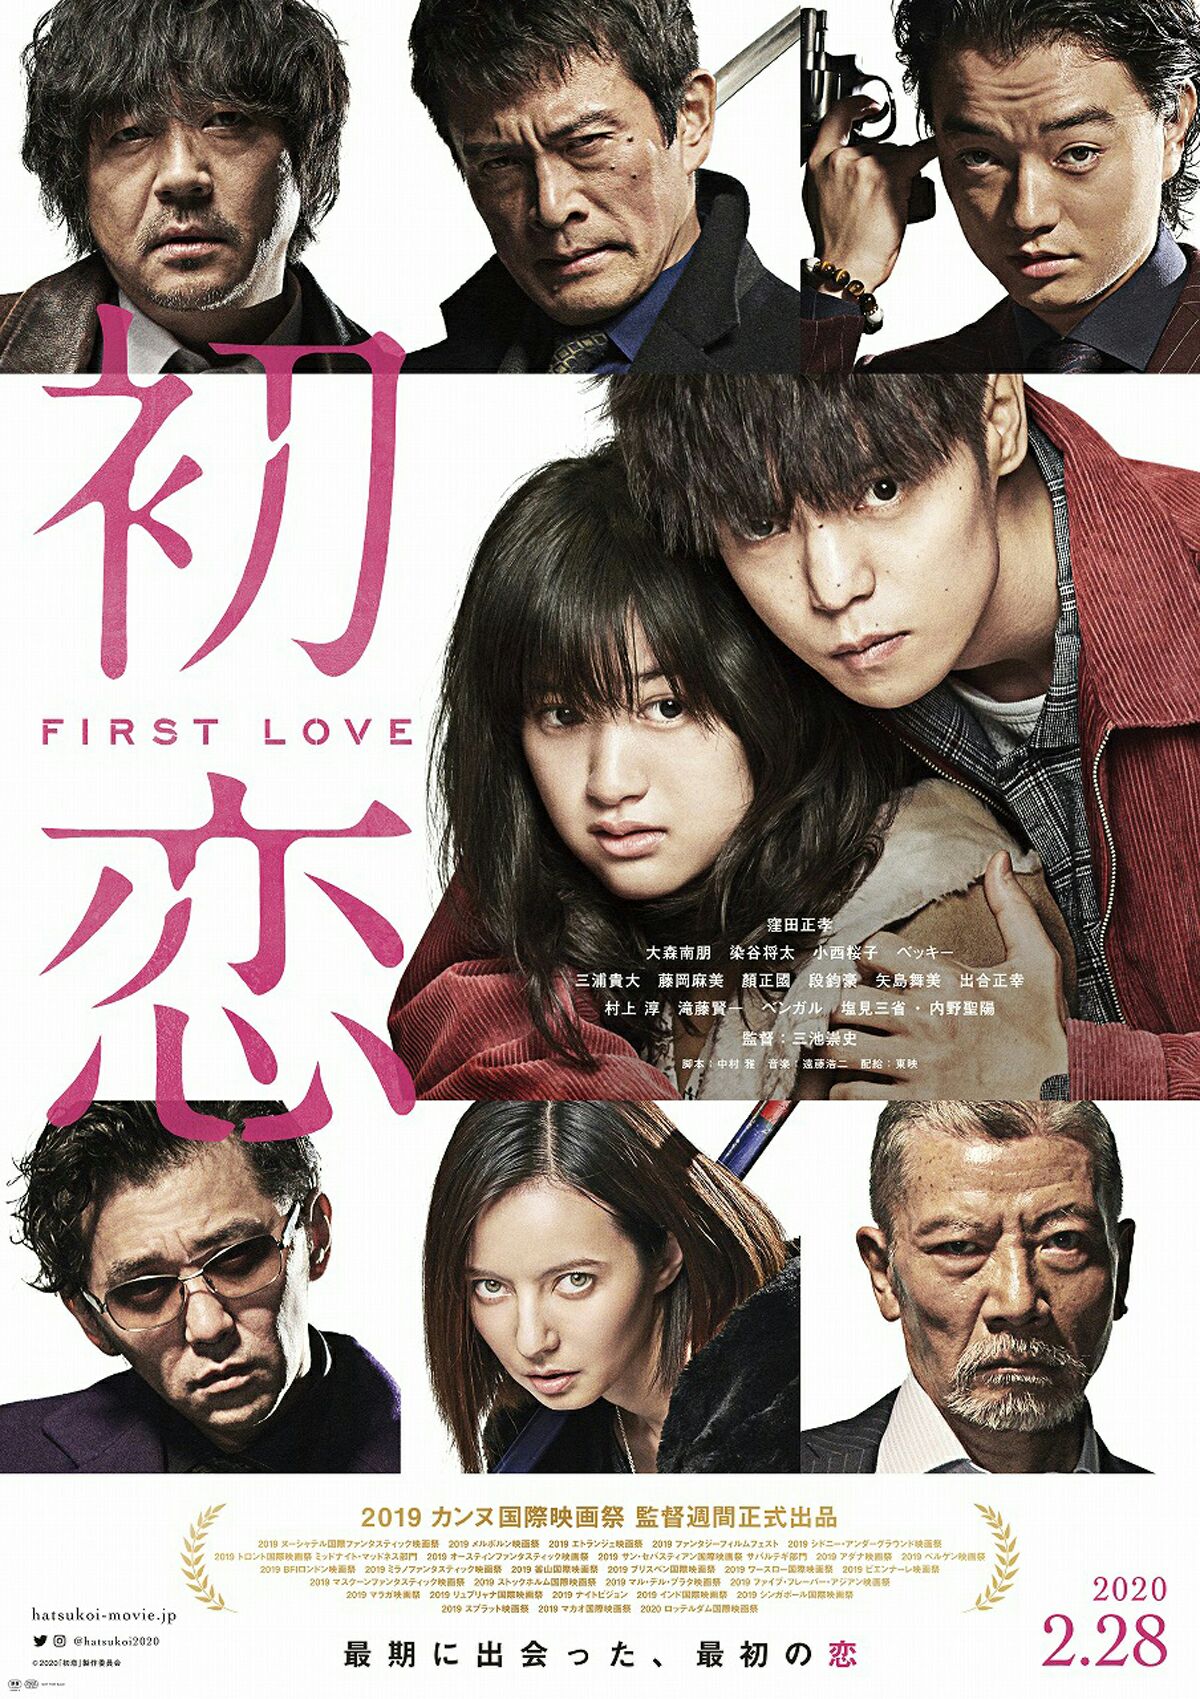 ʟᴀʟᴀɪɴᴇ J Movie Dramahd Raw Brrip 7p 1080p Title 初恋 First Love Genre Action Comedy Romance Crime Size 719mb 1 2gb Link